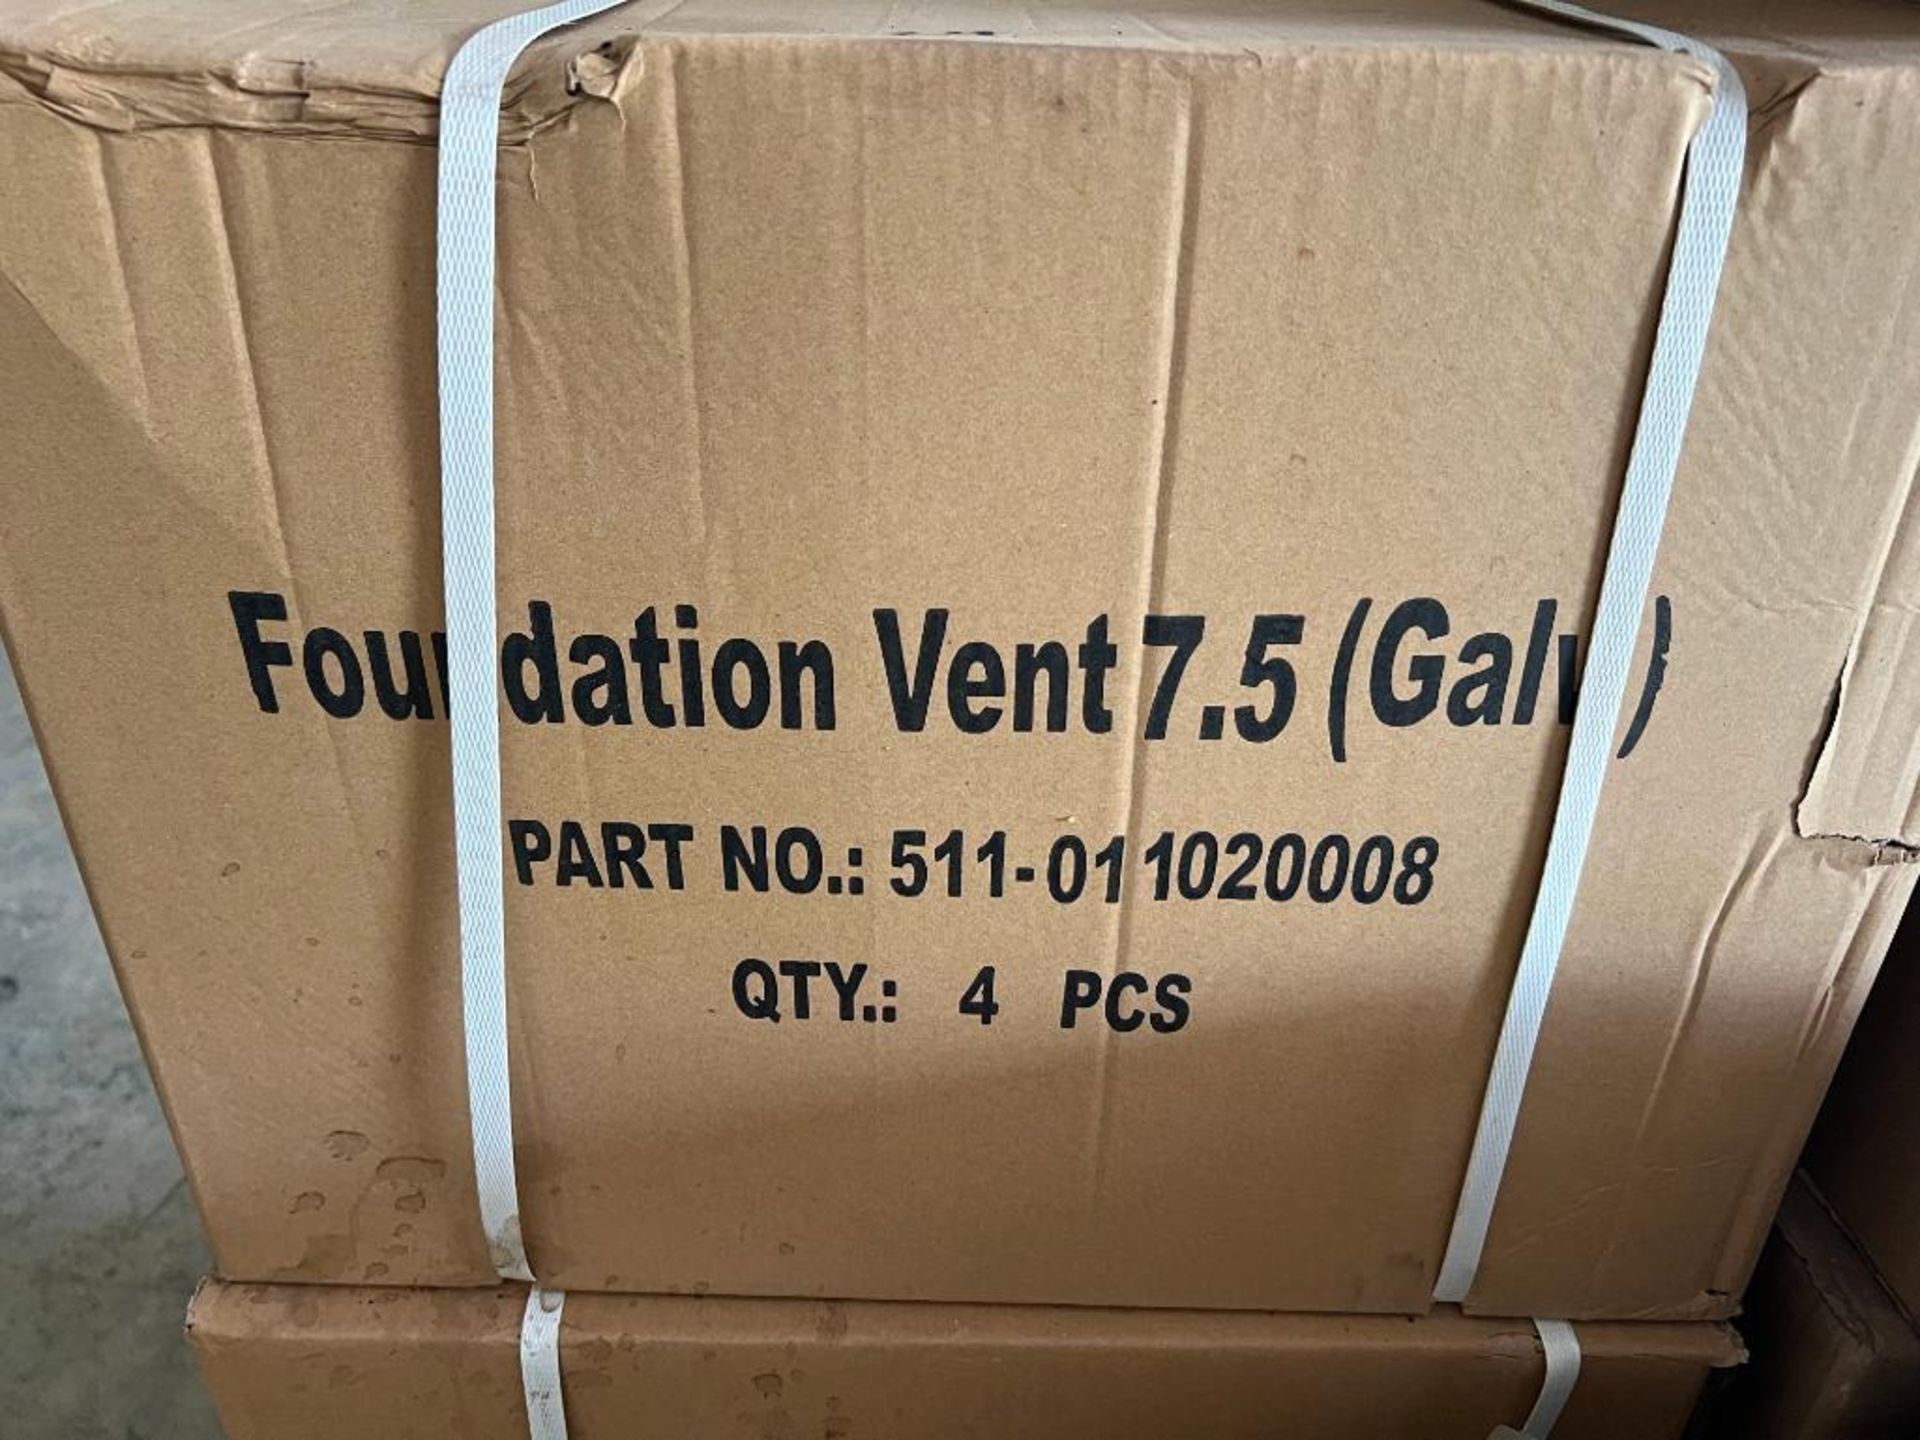 (24) Foundation Vent 7.5 (Galv) Part #511-011020008, 4 per Box. Located in Altamont, IL - Image 2 of 5